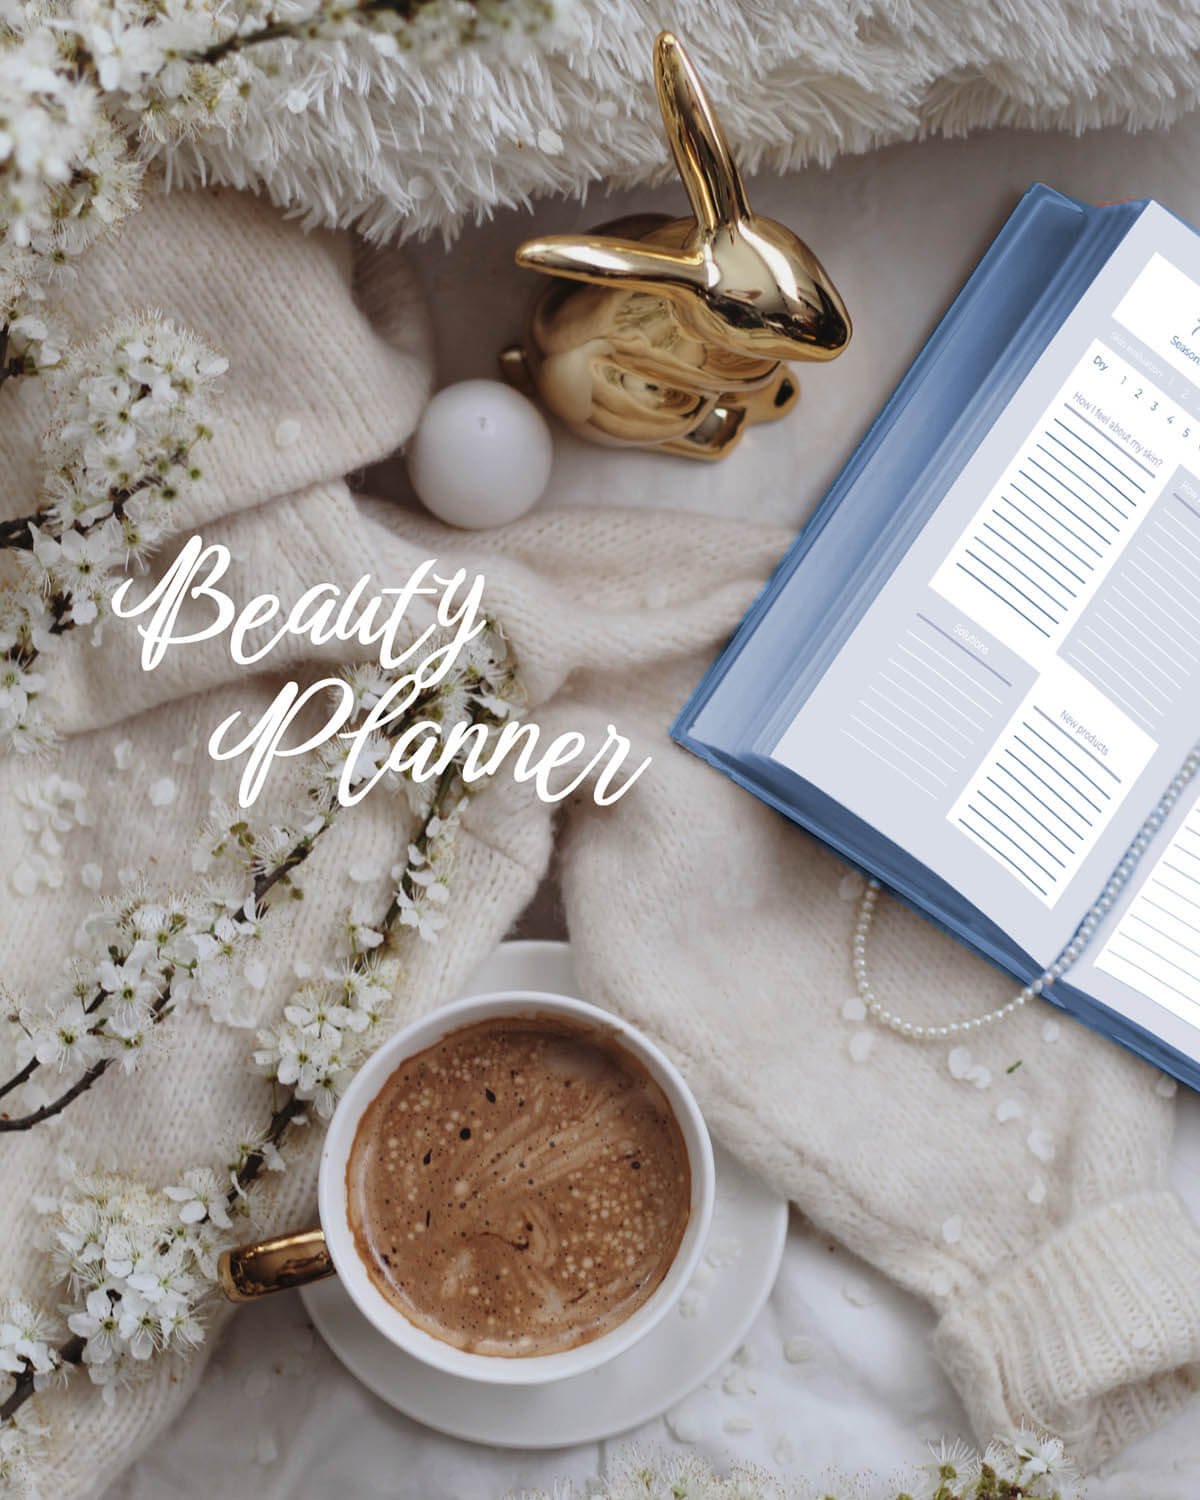 Blue beauty journal